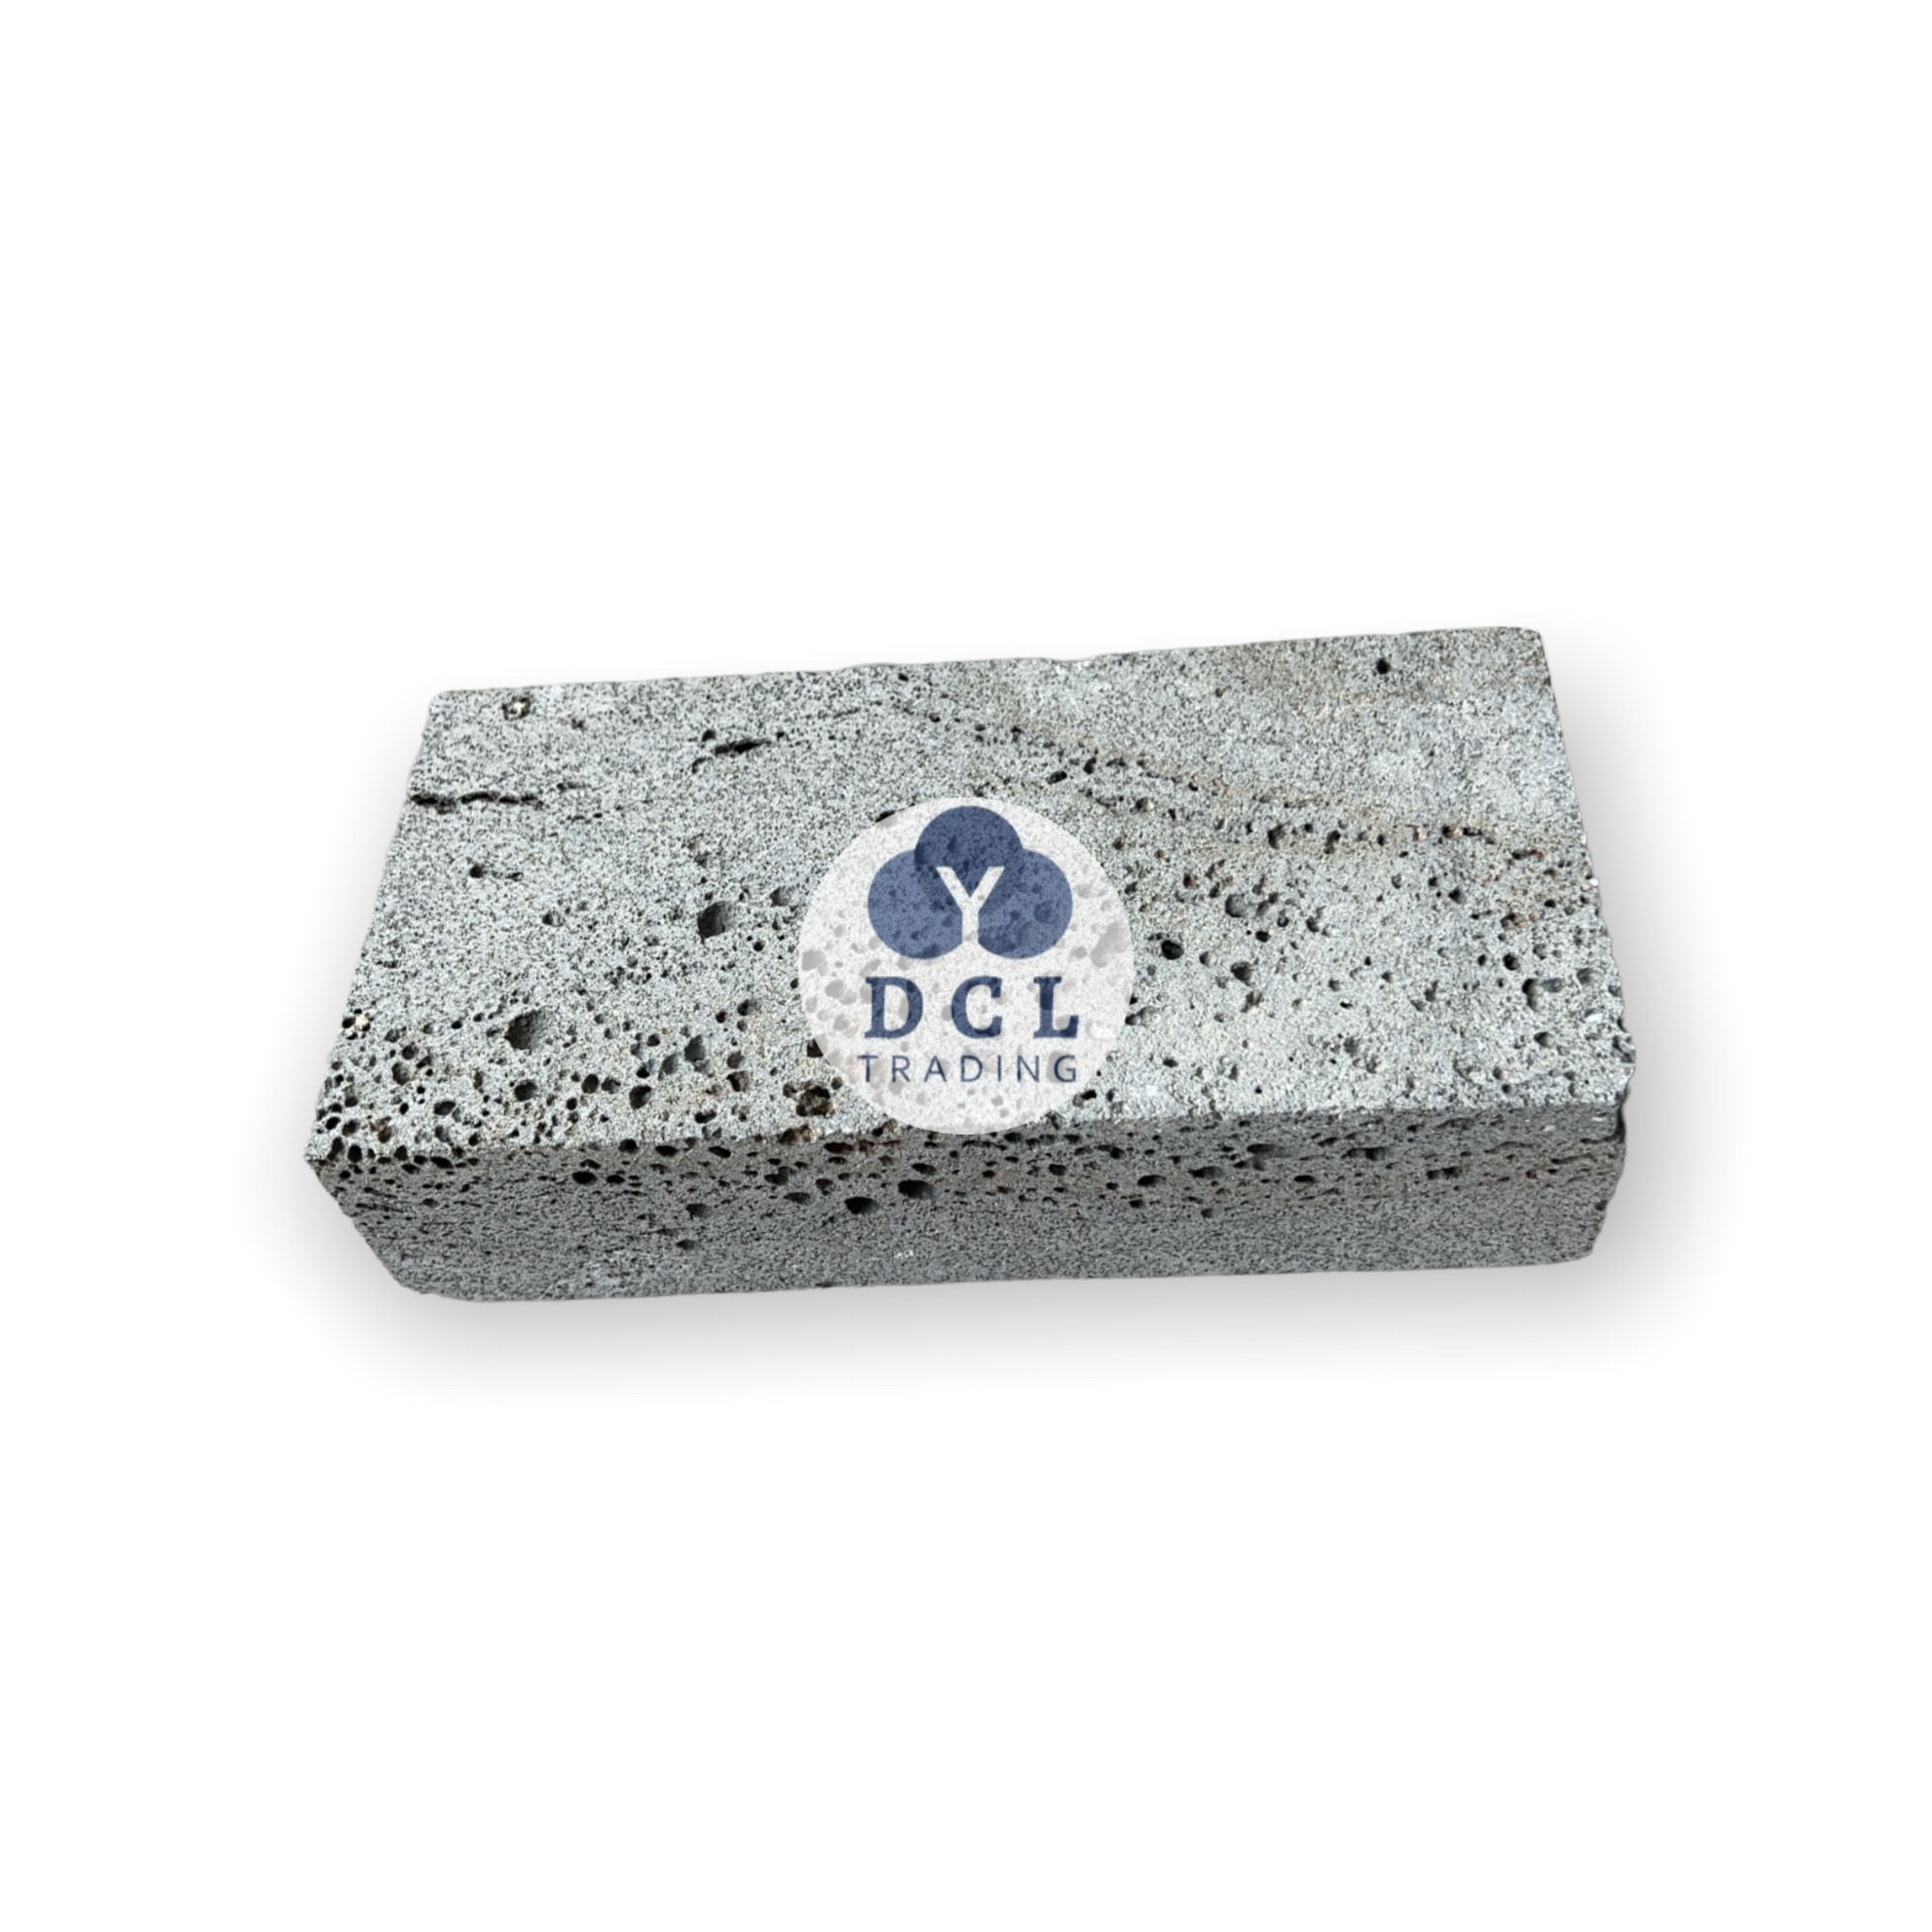  Basalt Stone 100-200-30 